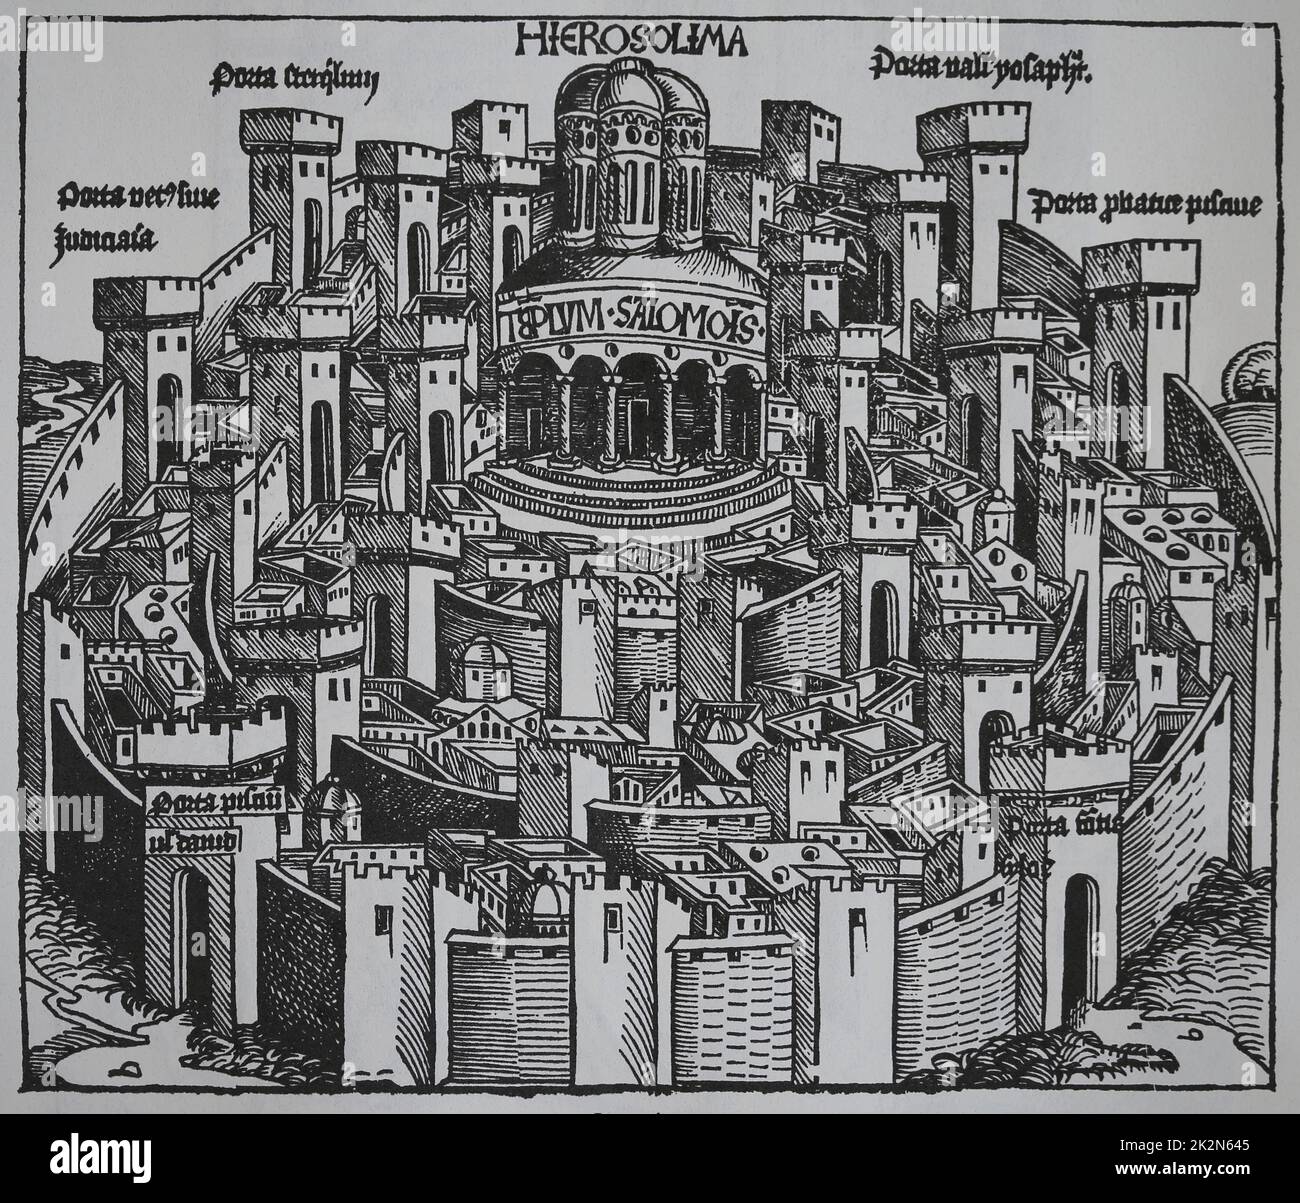 Medioevo. Terra Santa. Gerusalemme (Hierosolima). Le Cronache di Norimberga. 15th ° secolo. Foto Stock